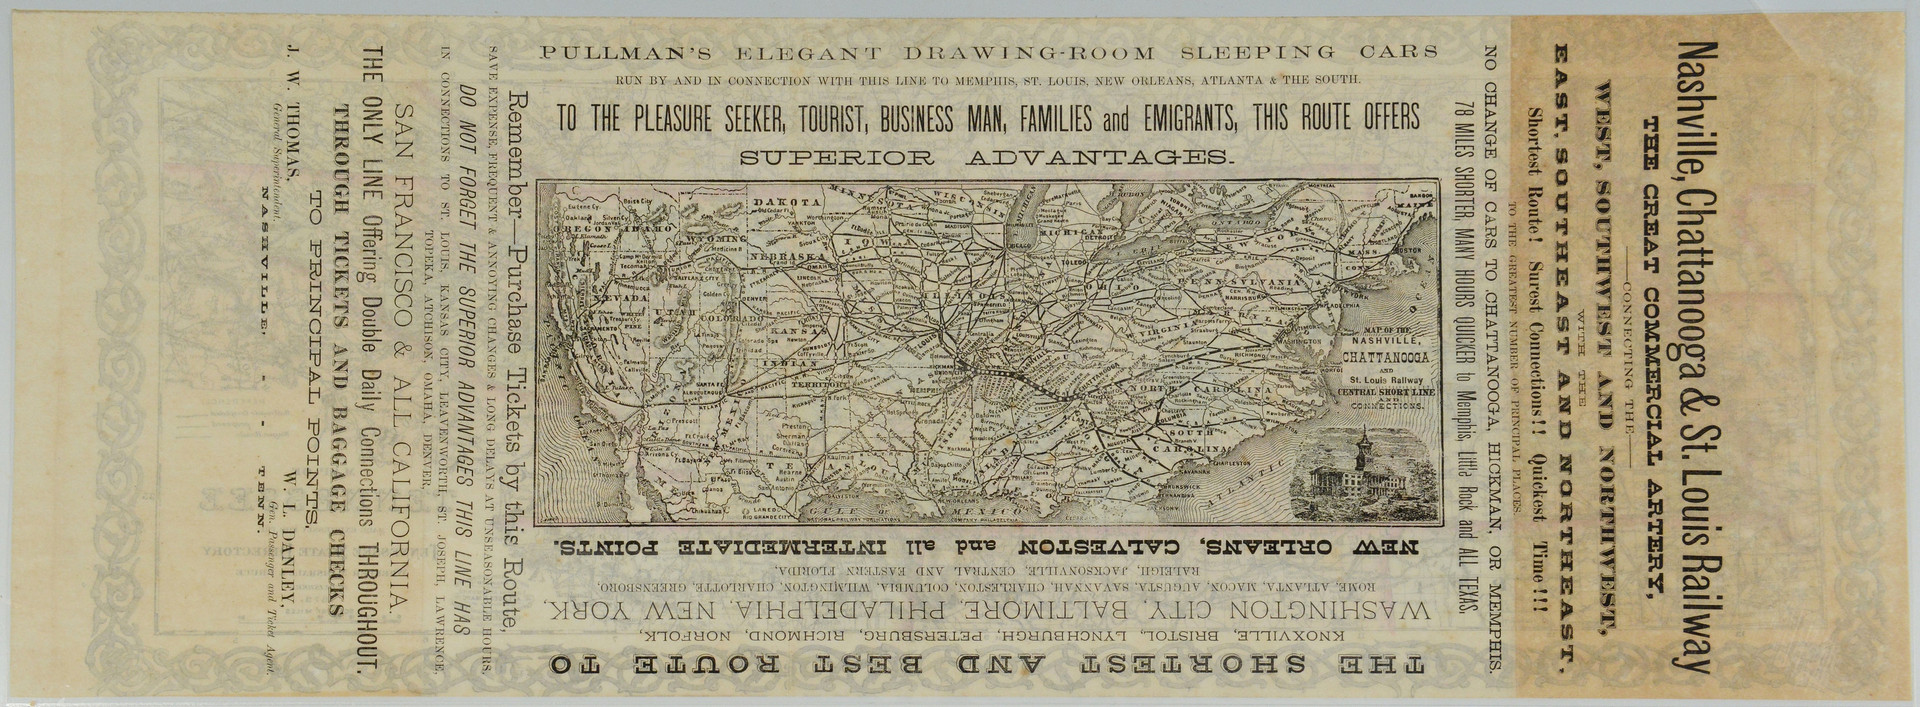 Lot 286: Tennessee Railroad Map, 1873